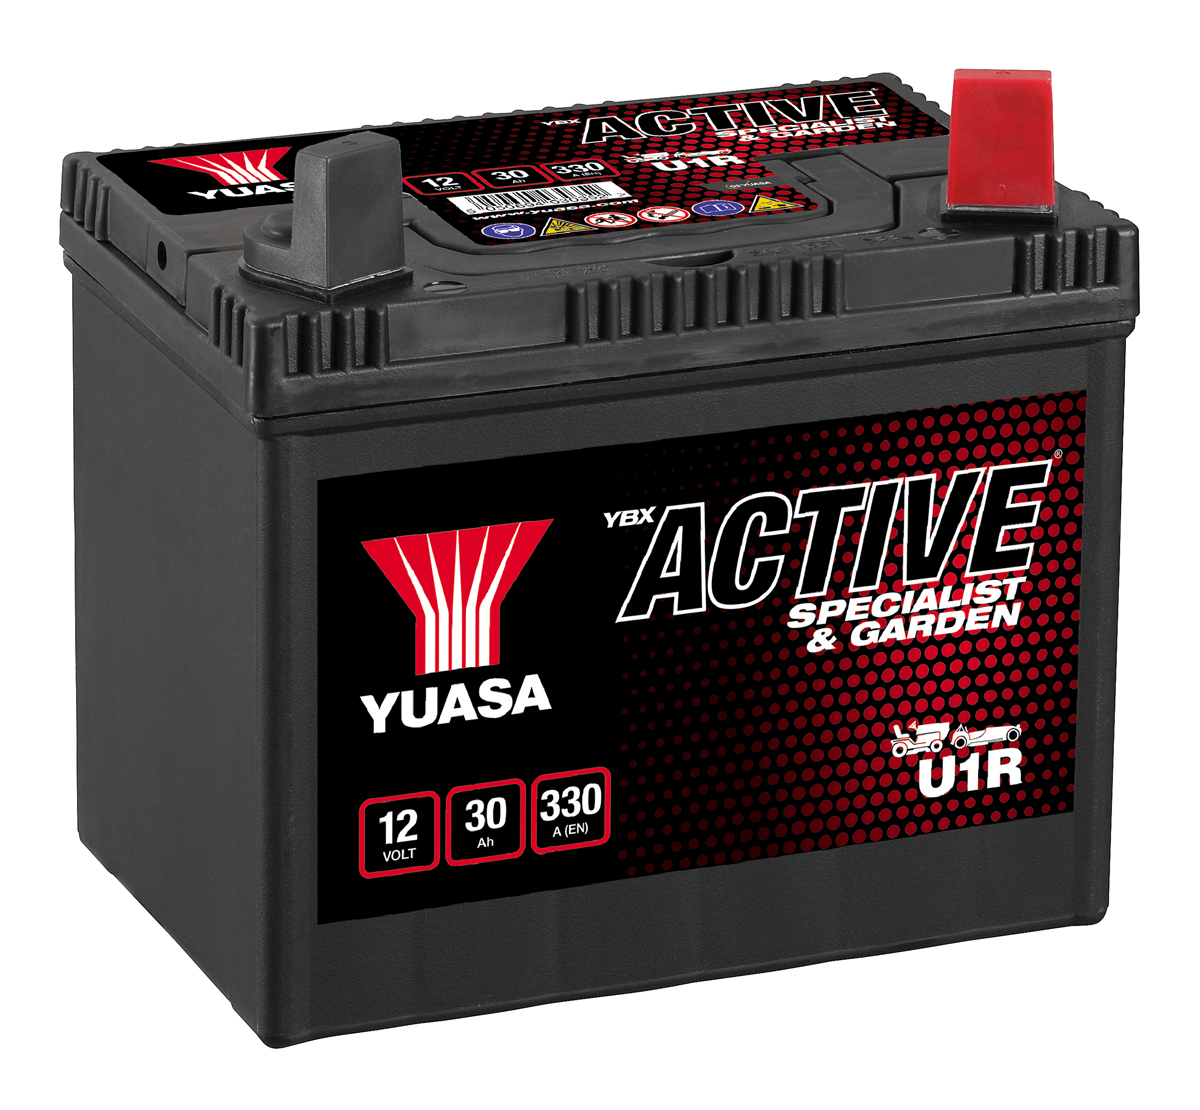 Yuasa YBX Active U1R Lawn Mower Battery